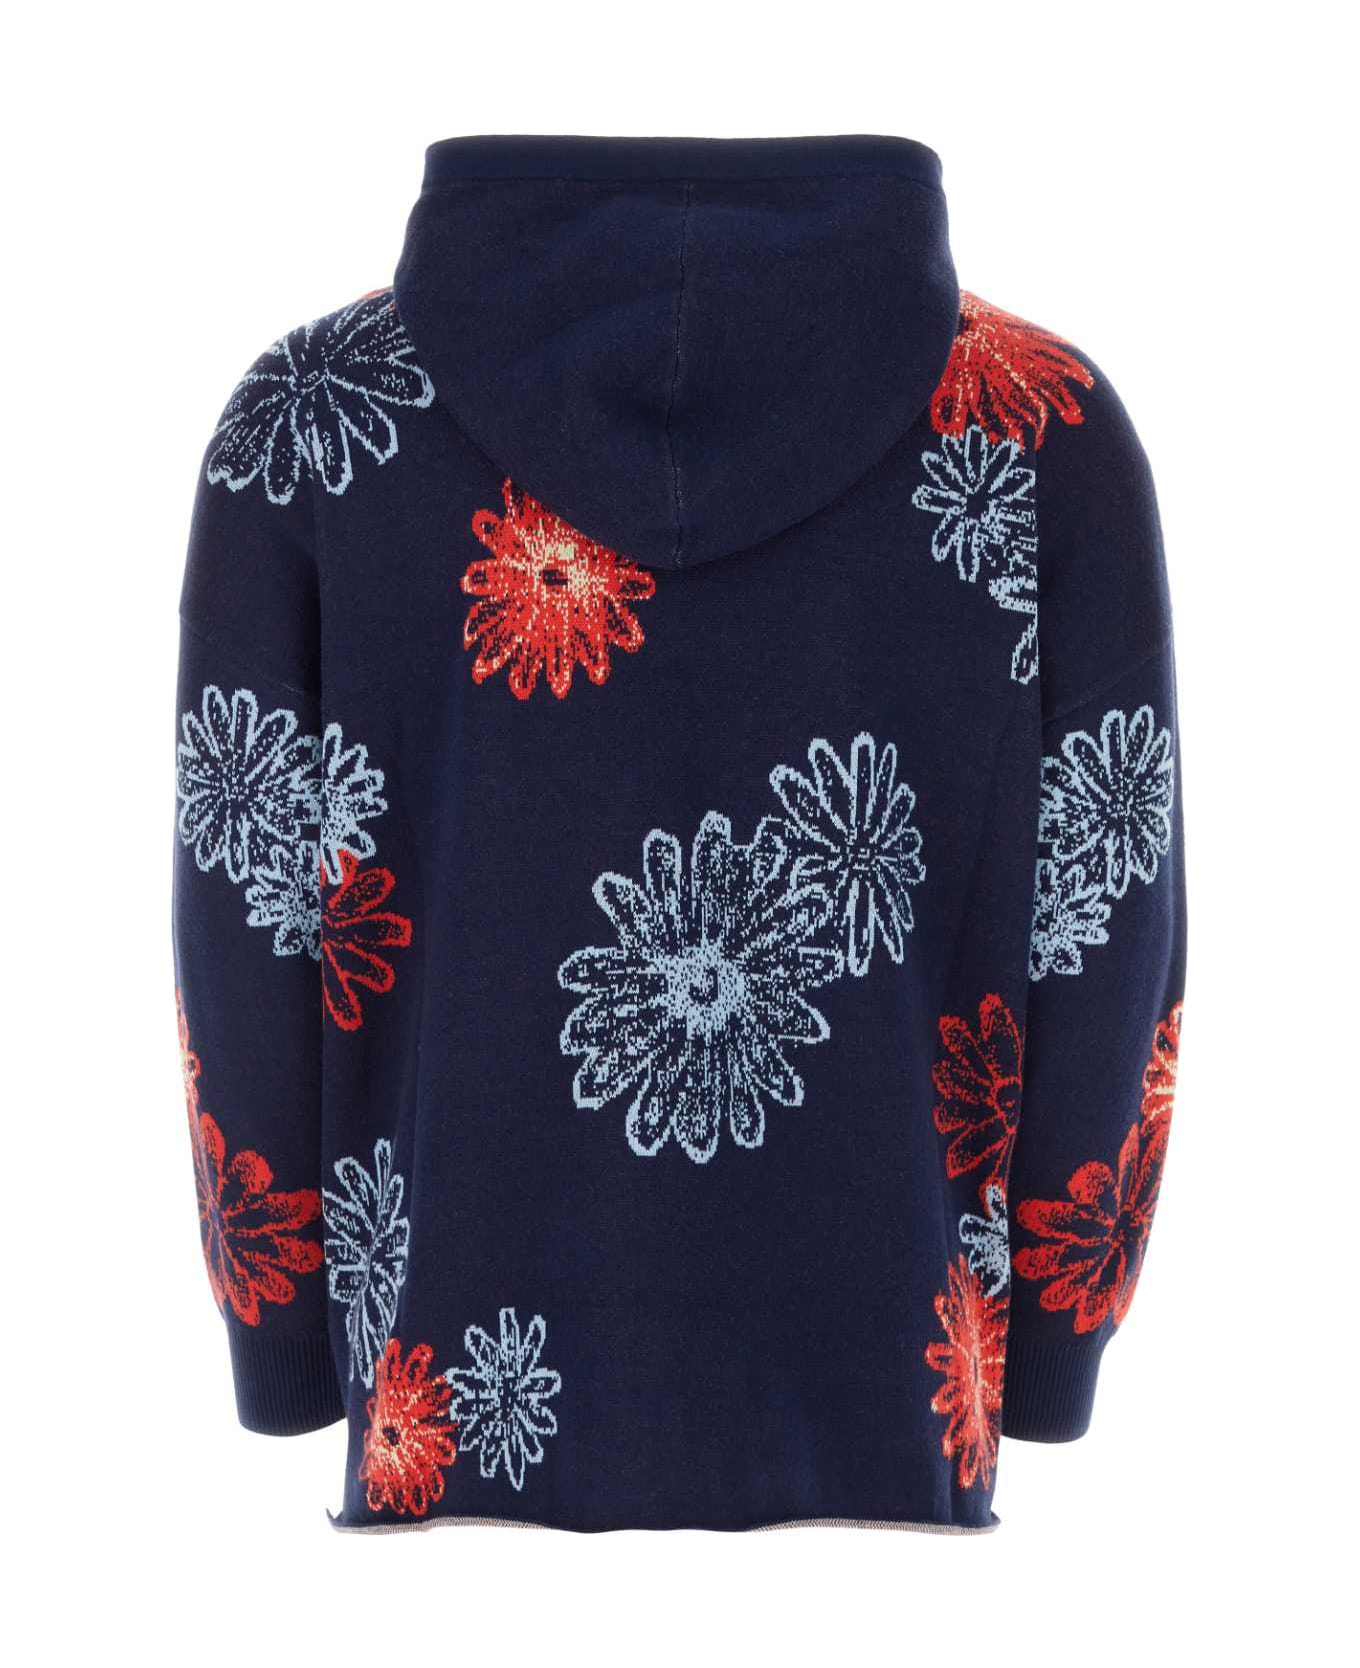 Bluemarble Embroidered Cotton Blend Sweater - NAV フリース